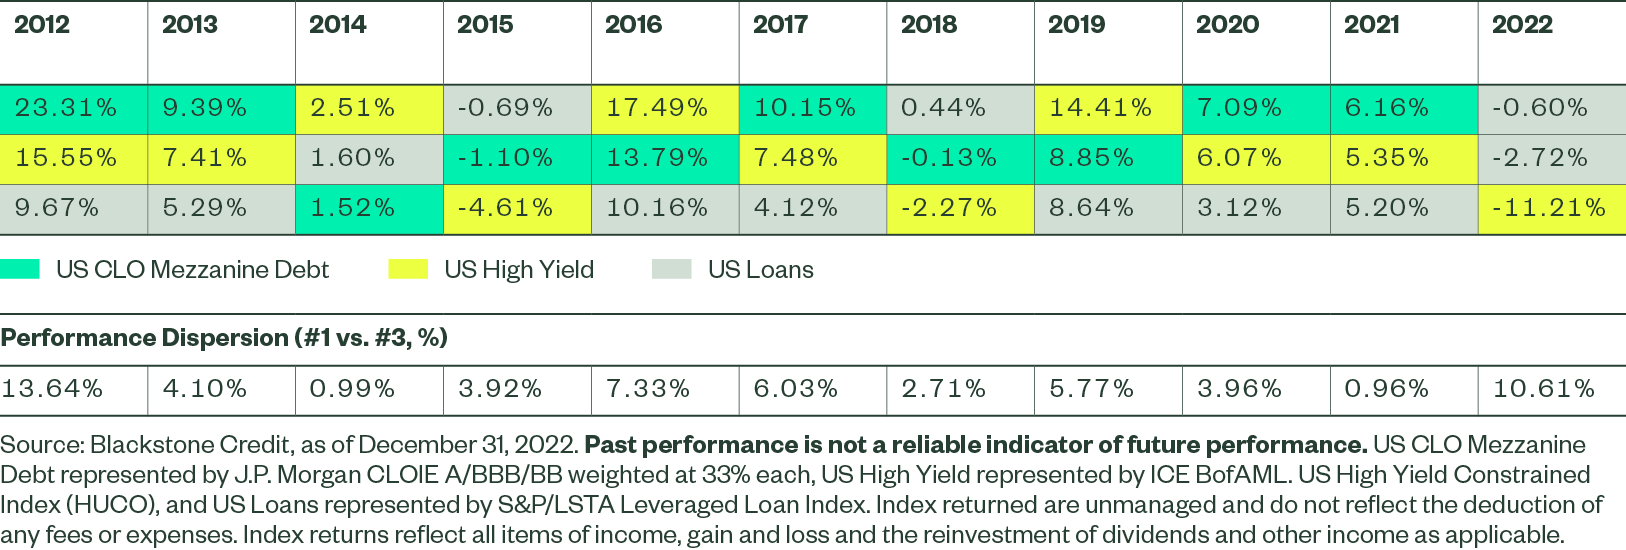 Annual Returns: CLOs versus Senior Loans and High Yield Bonds (%)